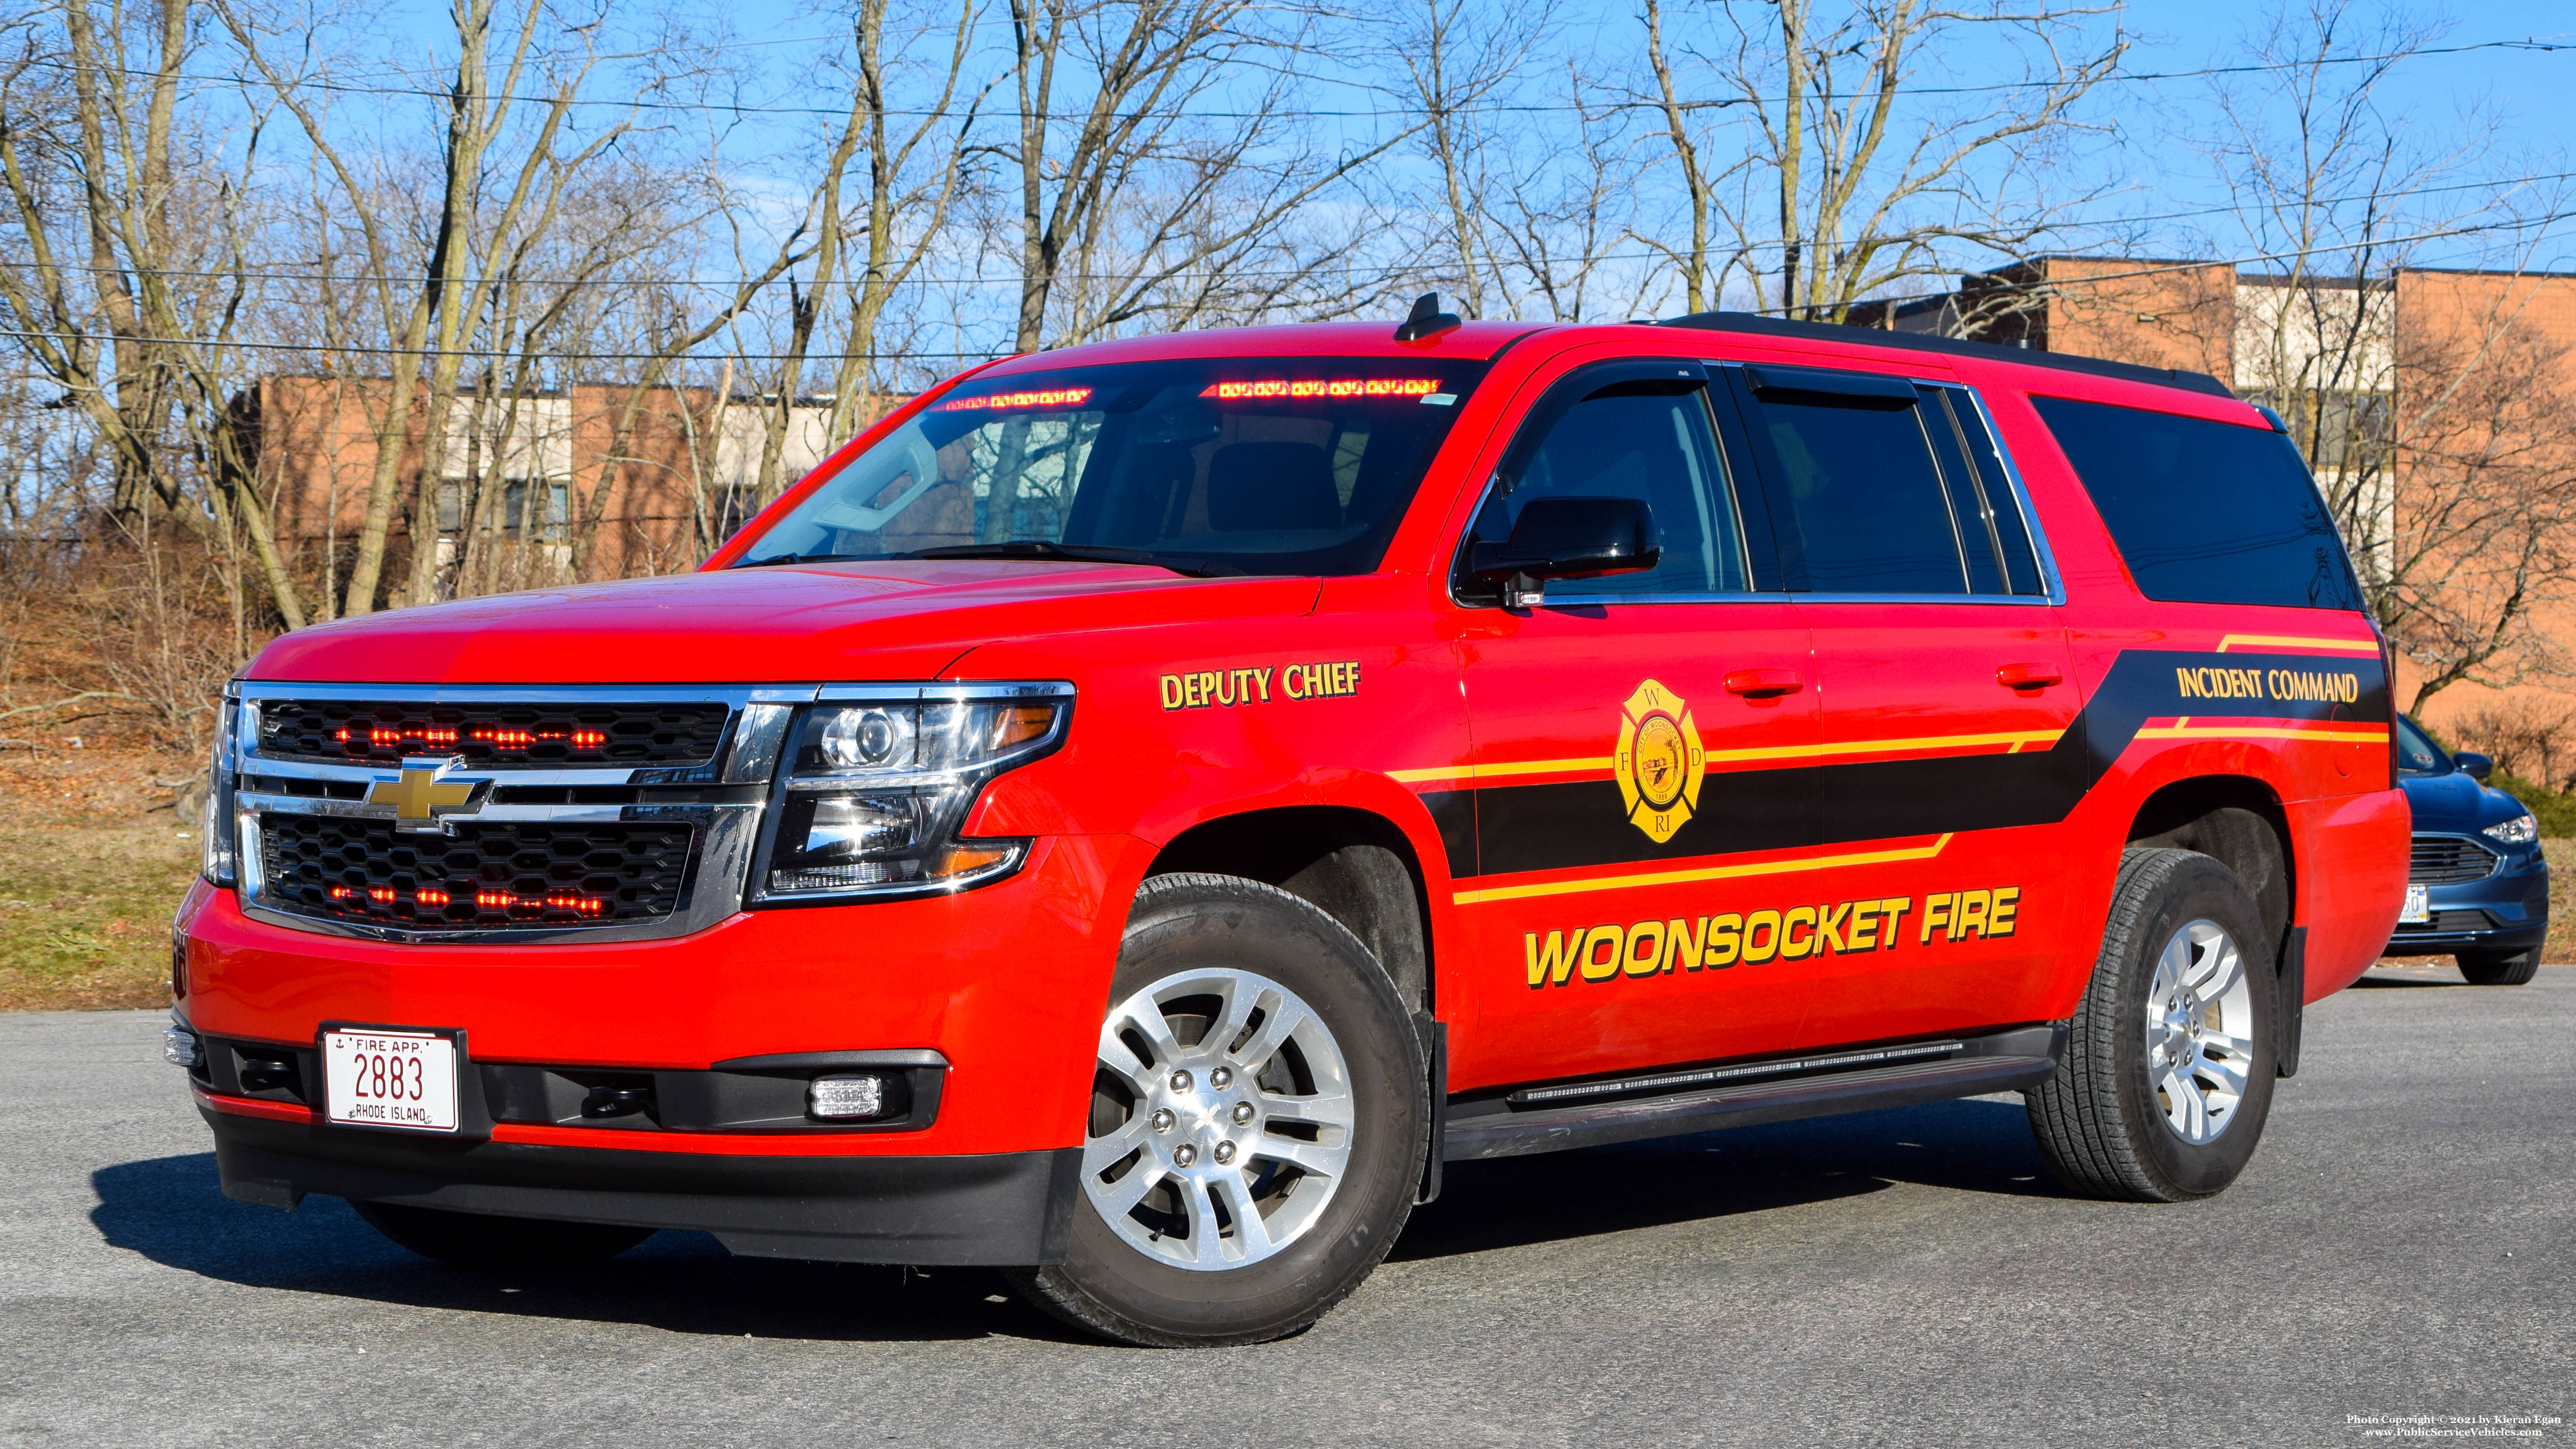 A photo  of Woonsocket Fire
            Deputy Chief's Unit, a 2019 Chevrolet Suburban             taken by Kieran Egan